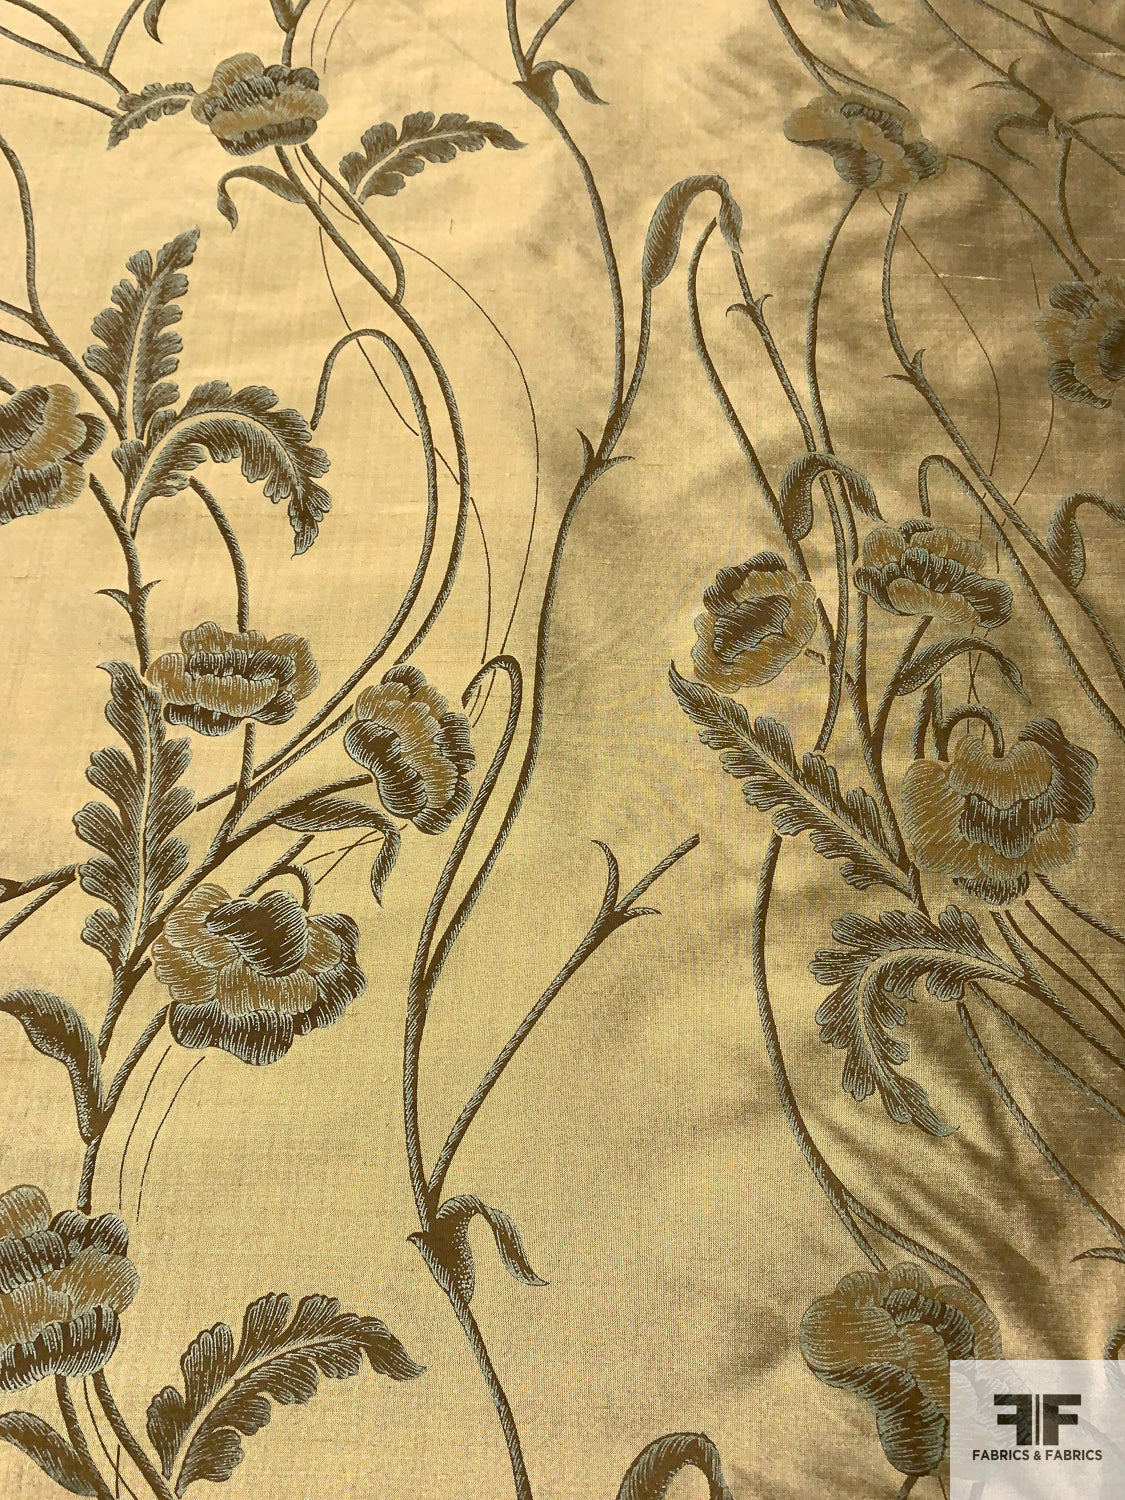 Floral Vines Printed Silk Taffeta-Shantung - Antique Gold / Brown / Sage